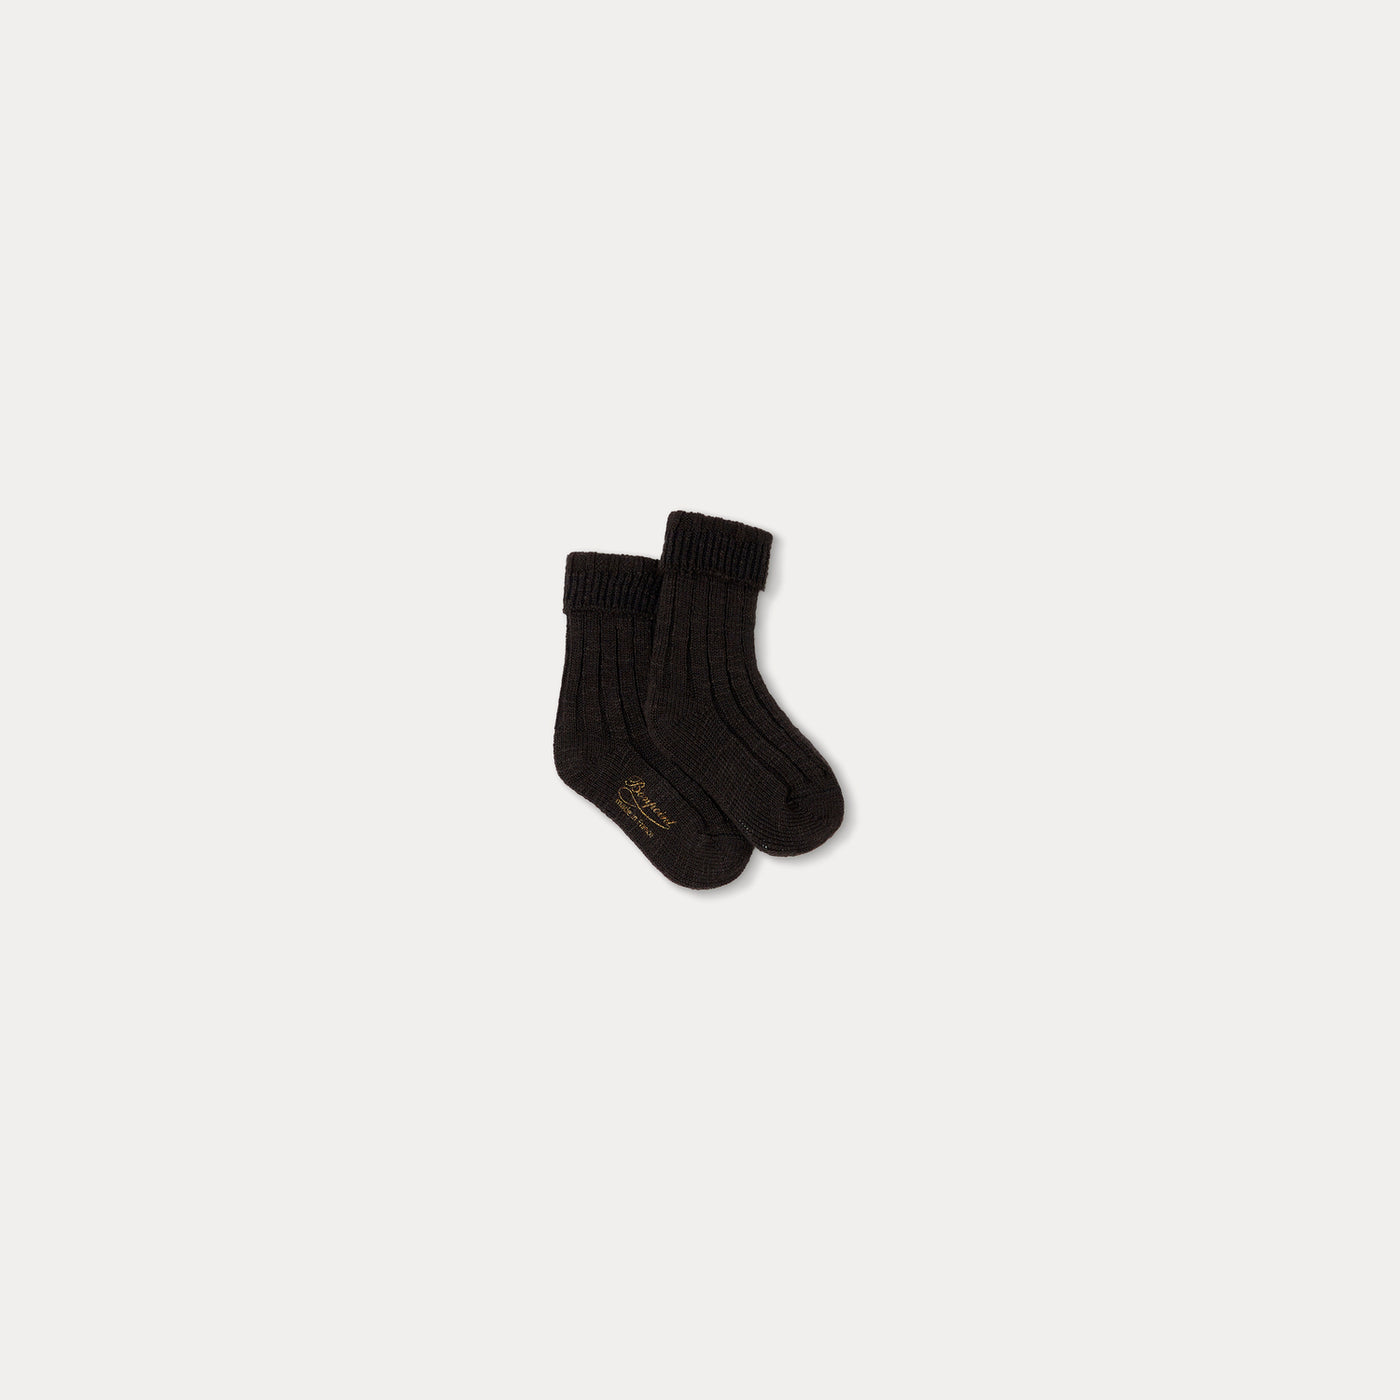 Béthine Socks heathered gray